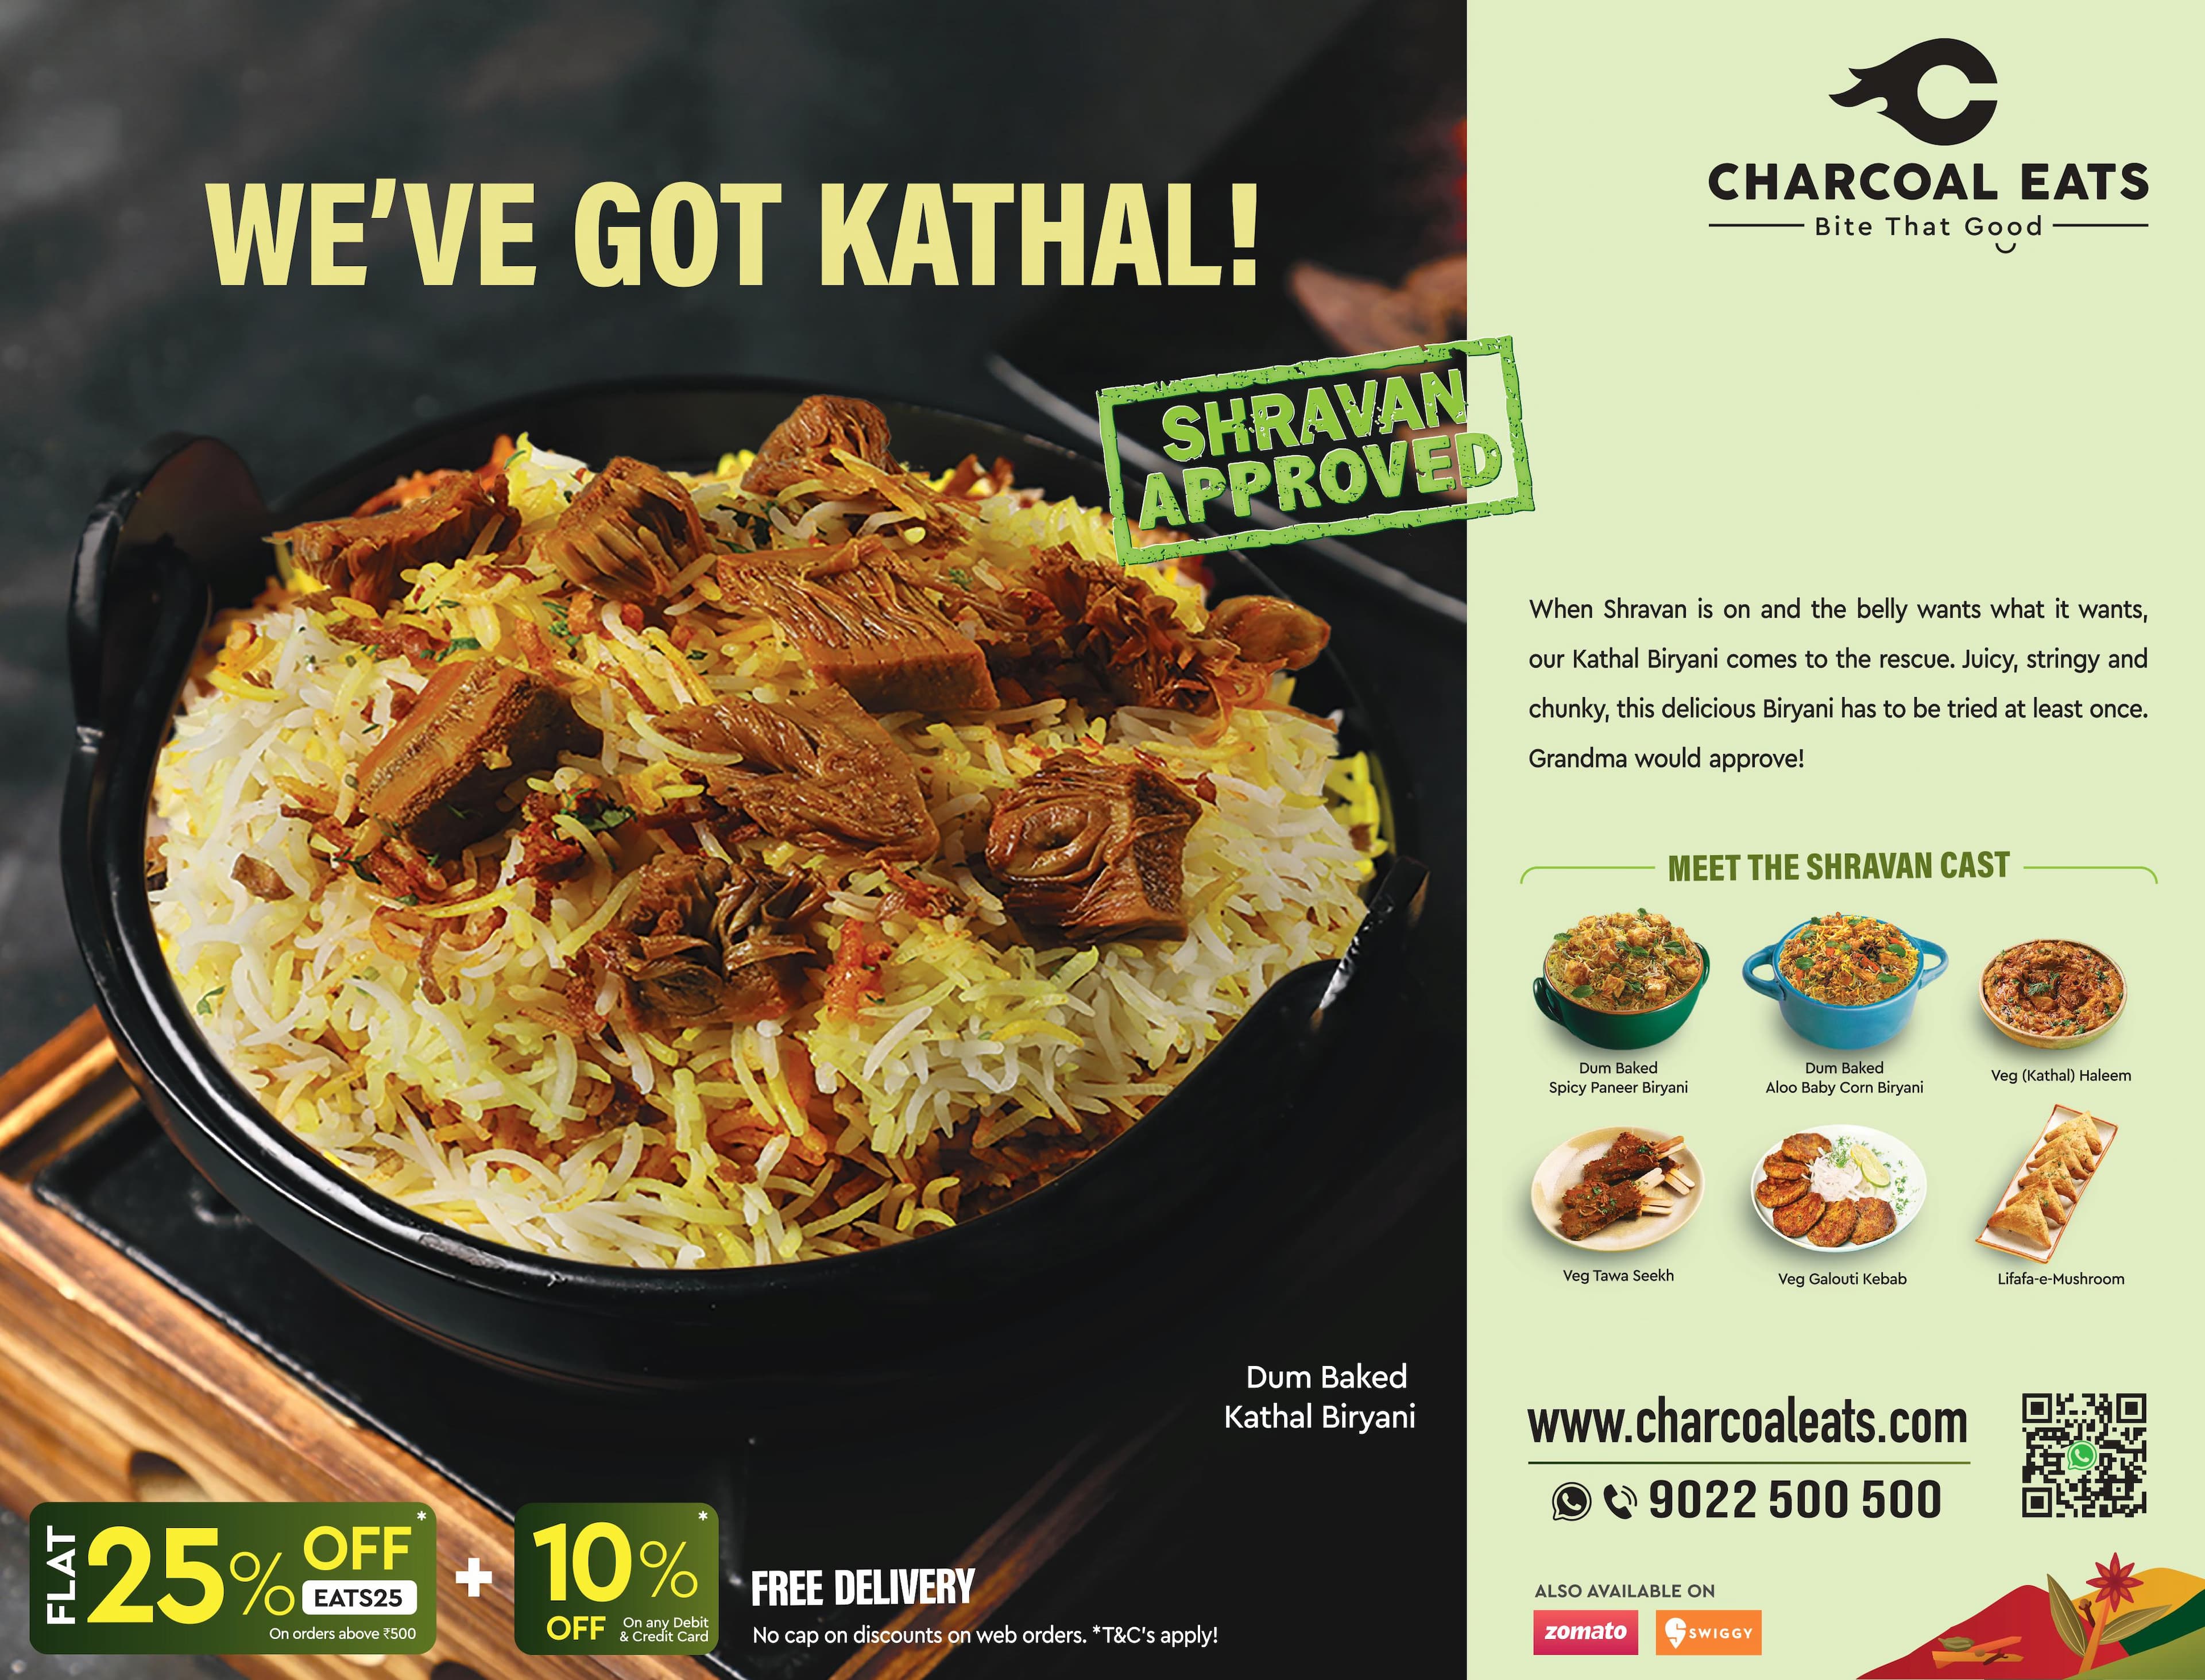 Charcoal Eats | We Have Got Kathal